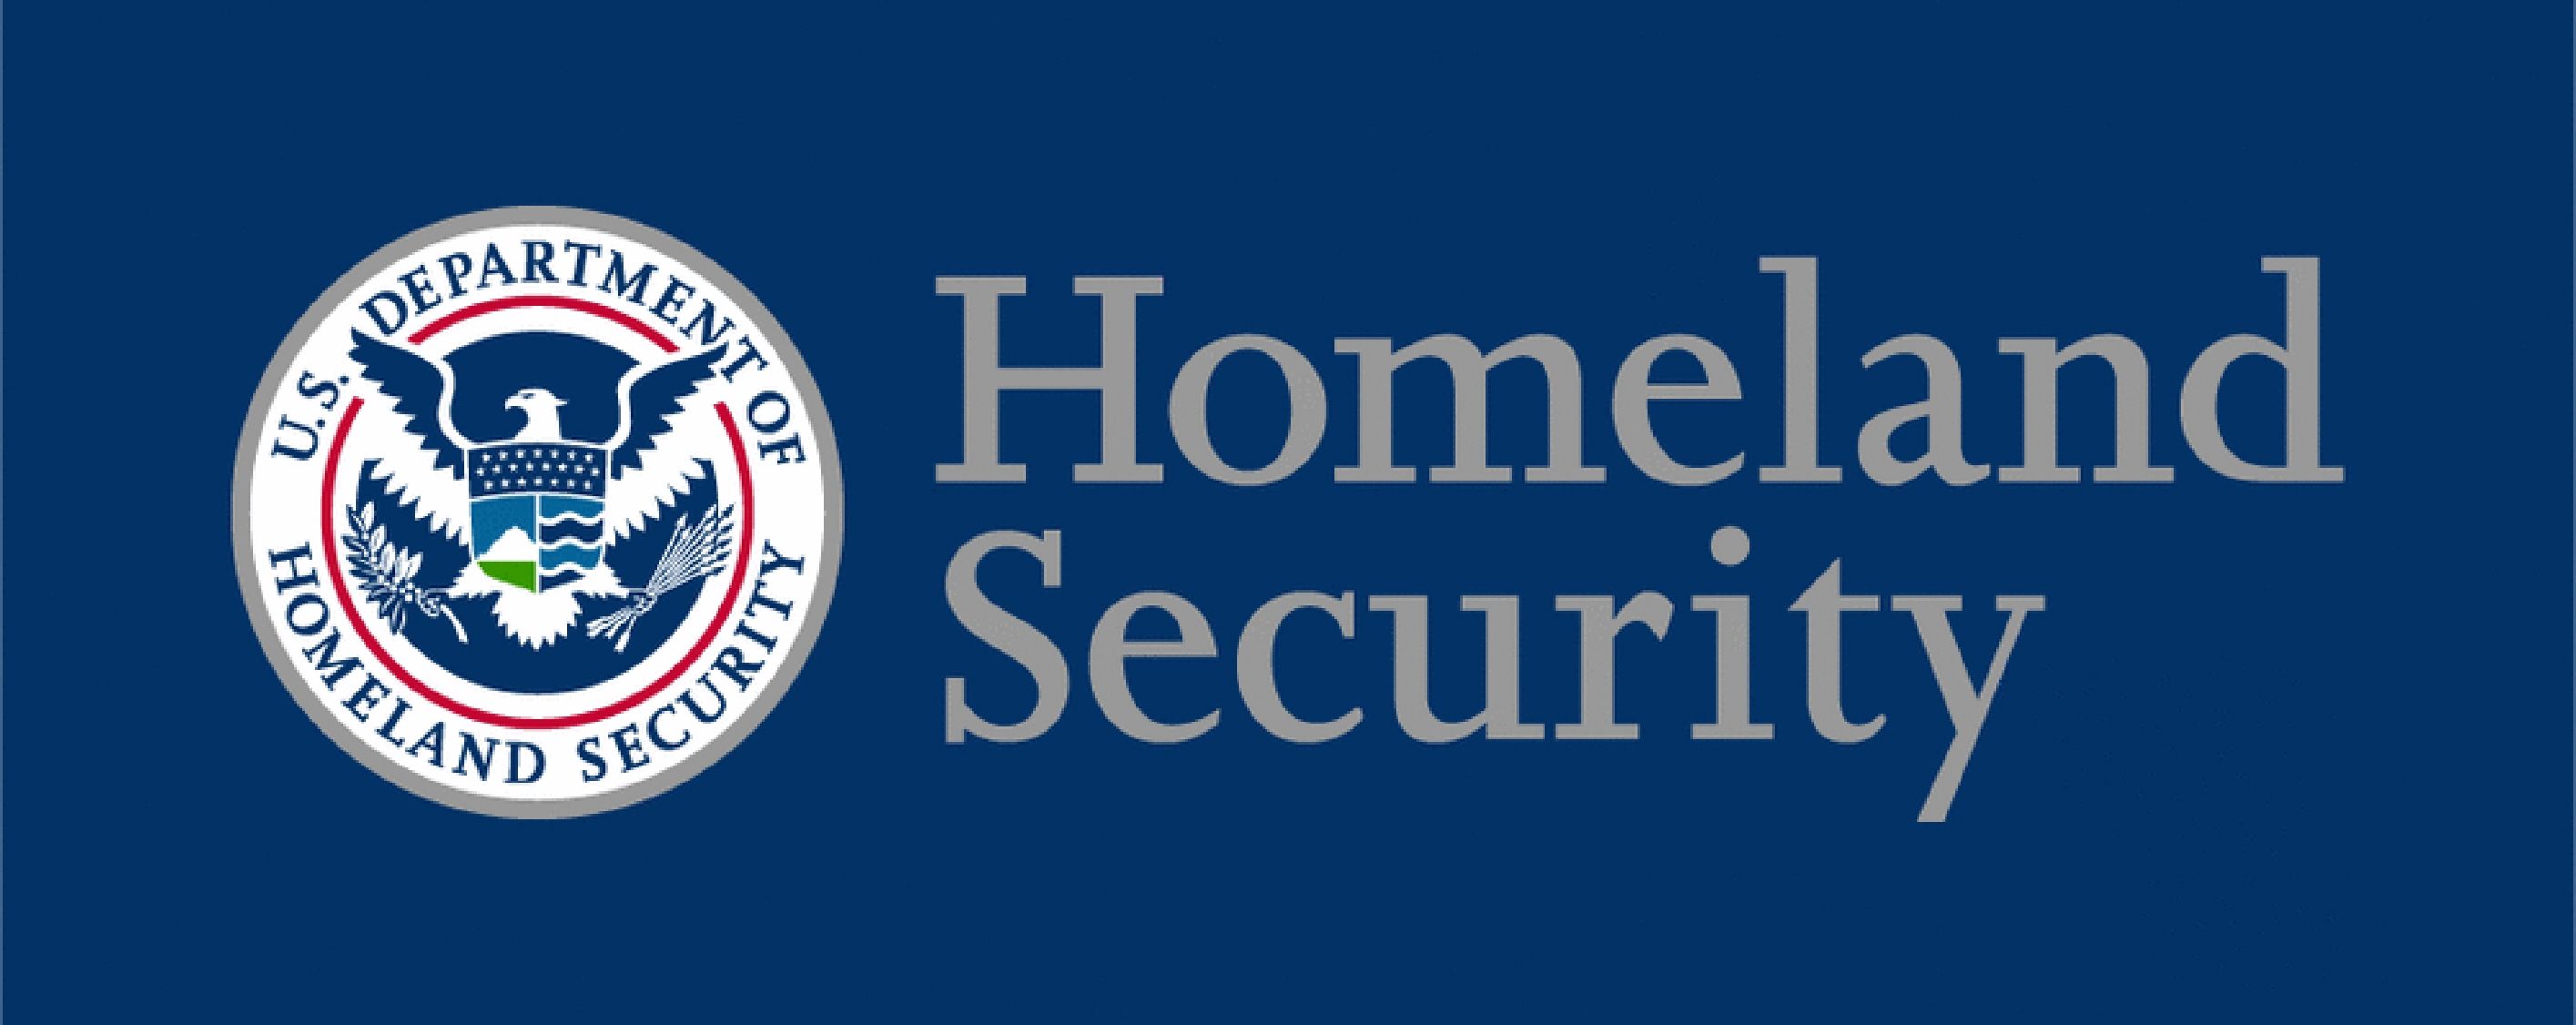 Homeland Security Wallpaper on .hipwallpaper.com